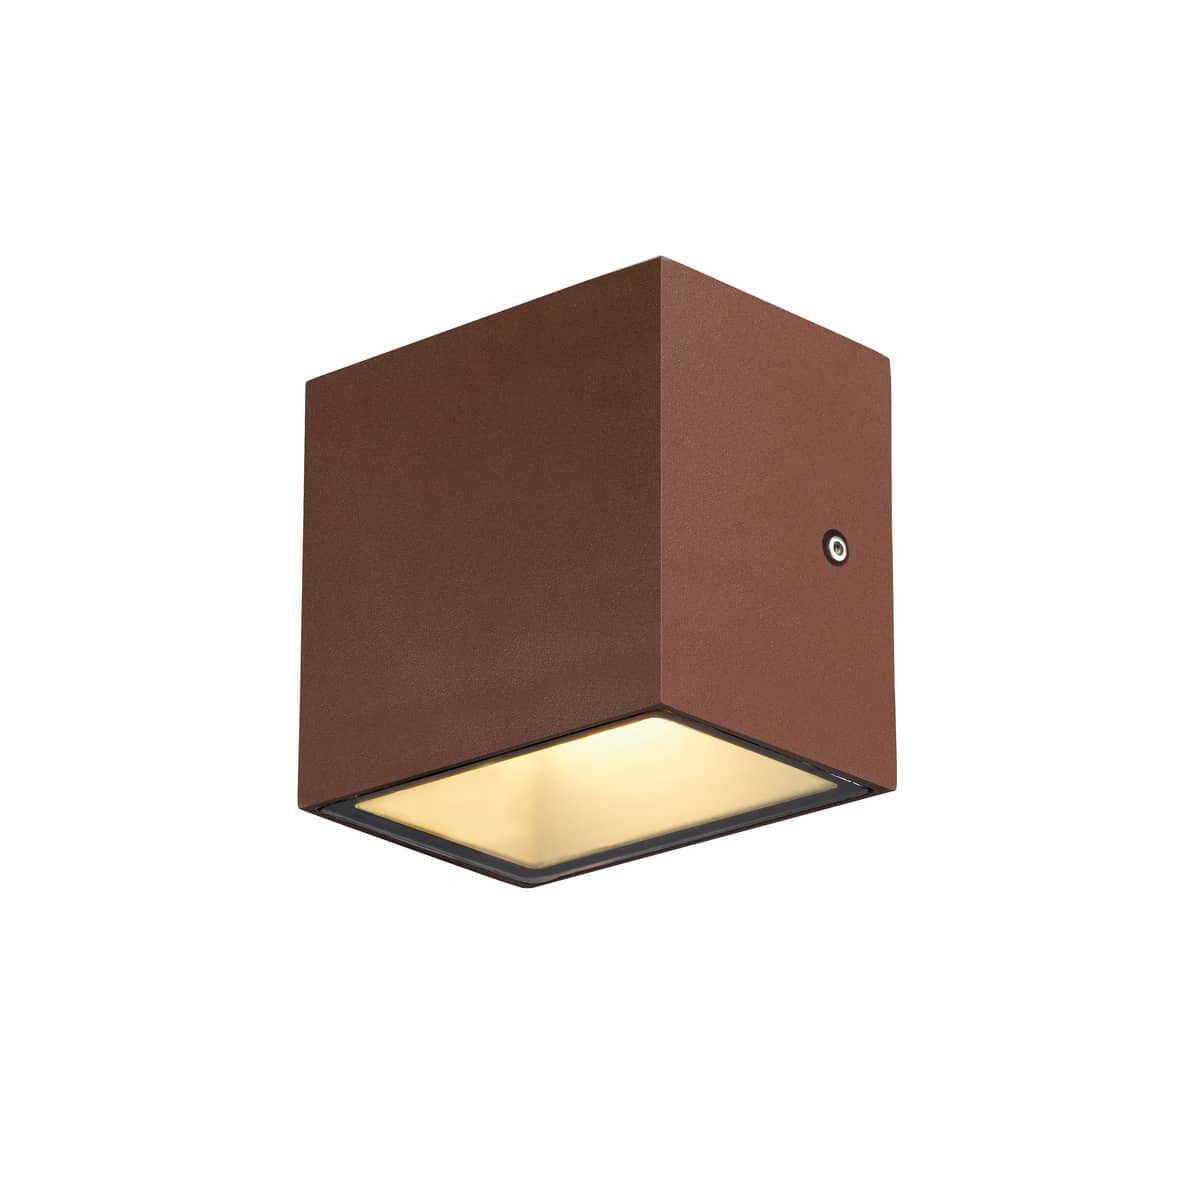 SLV Sitra S WL Single - Outdoor ceiling lighting - Rust colour - Aluminium - IP44 - Facade - Garage - I